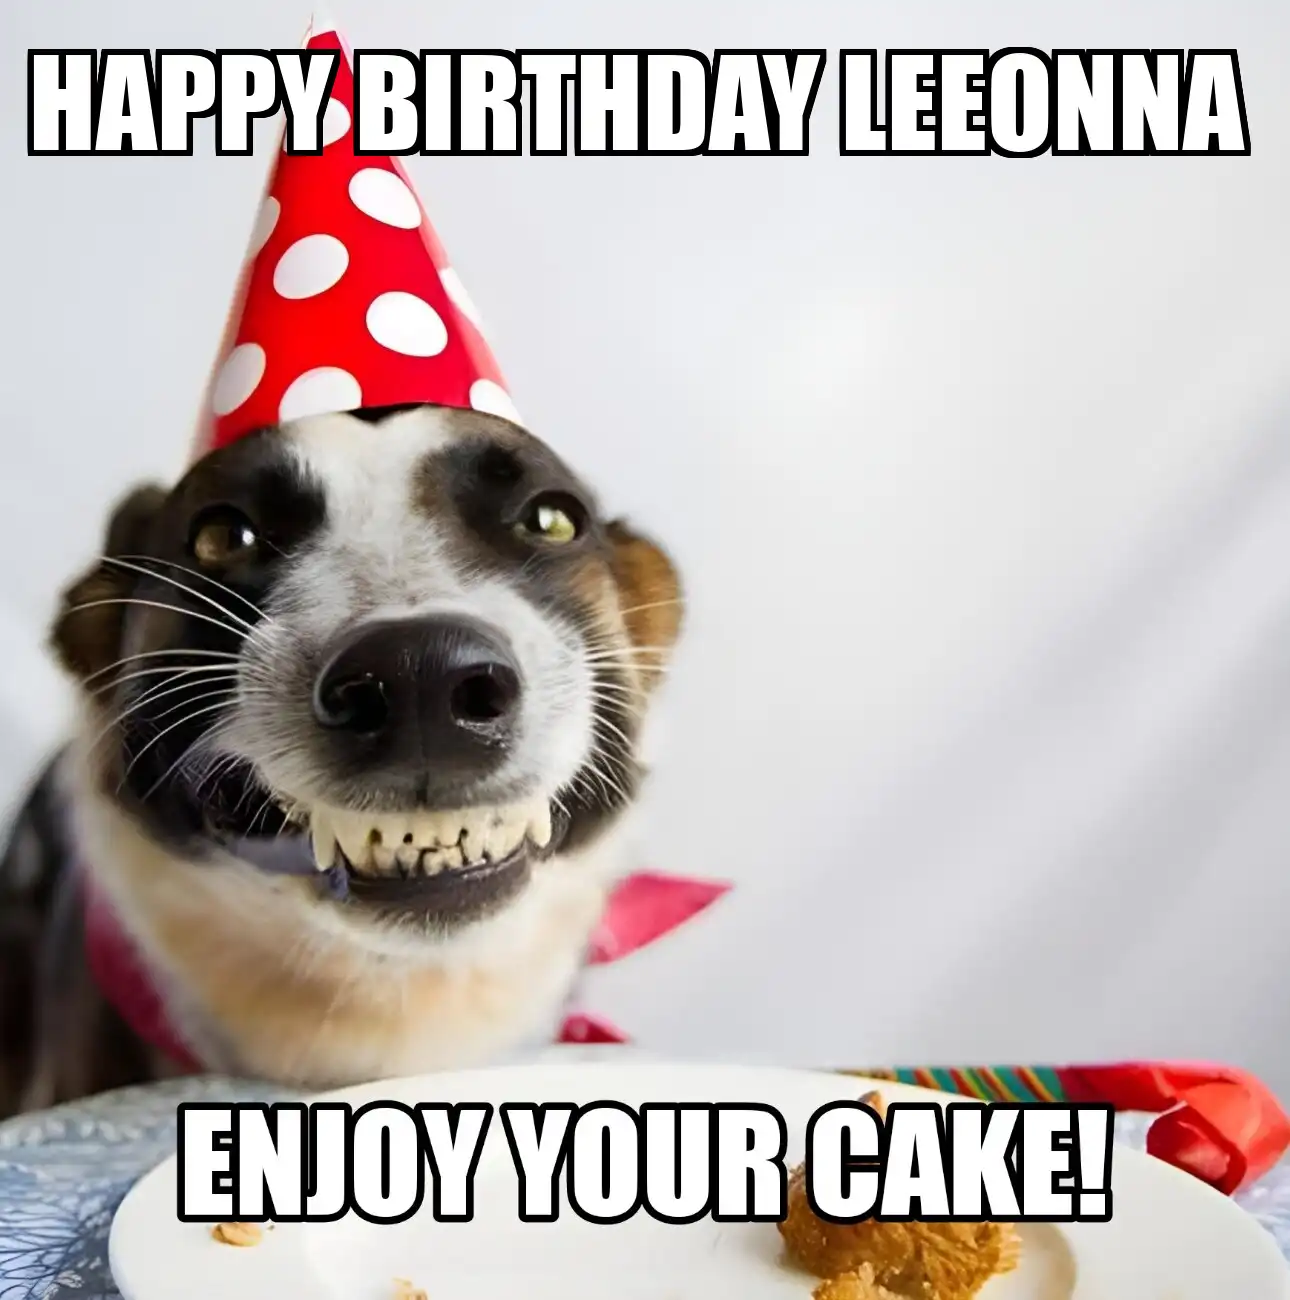 Happy Birthday Leeonna Enjoy Your Cake Dog Meme